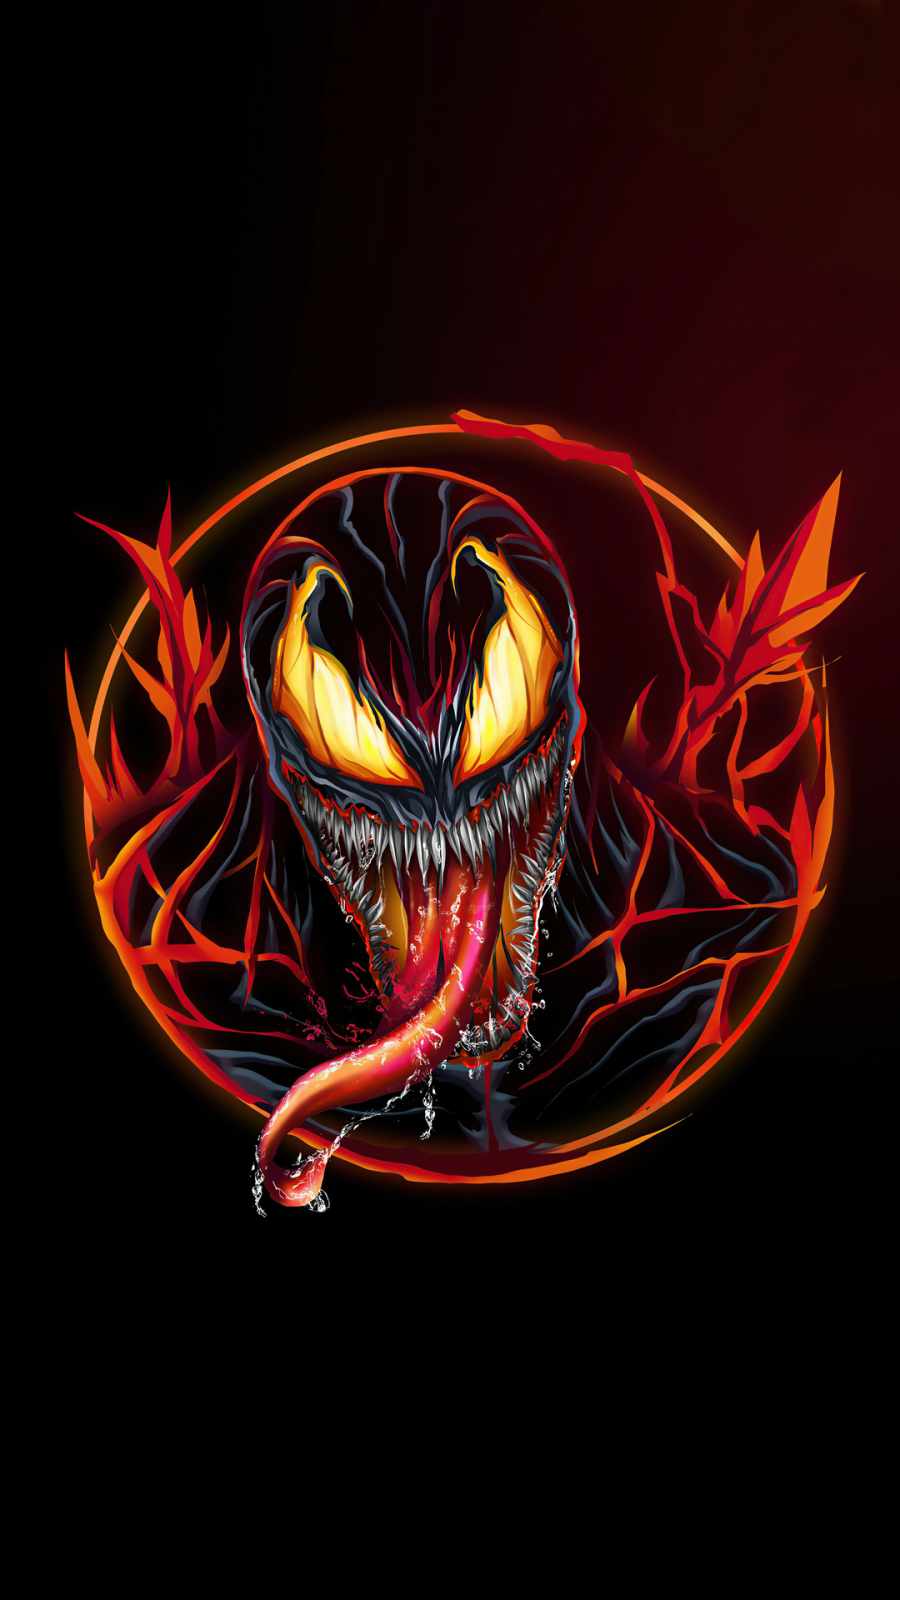 Venom Carnage Fire IPhone Wallpaper Wallpaper, iPhone Wallpaper